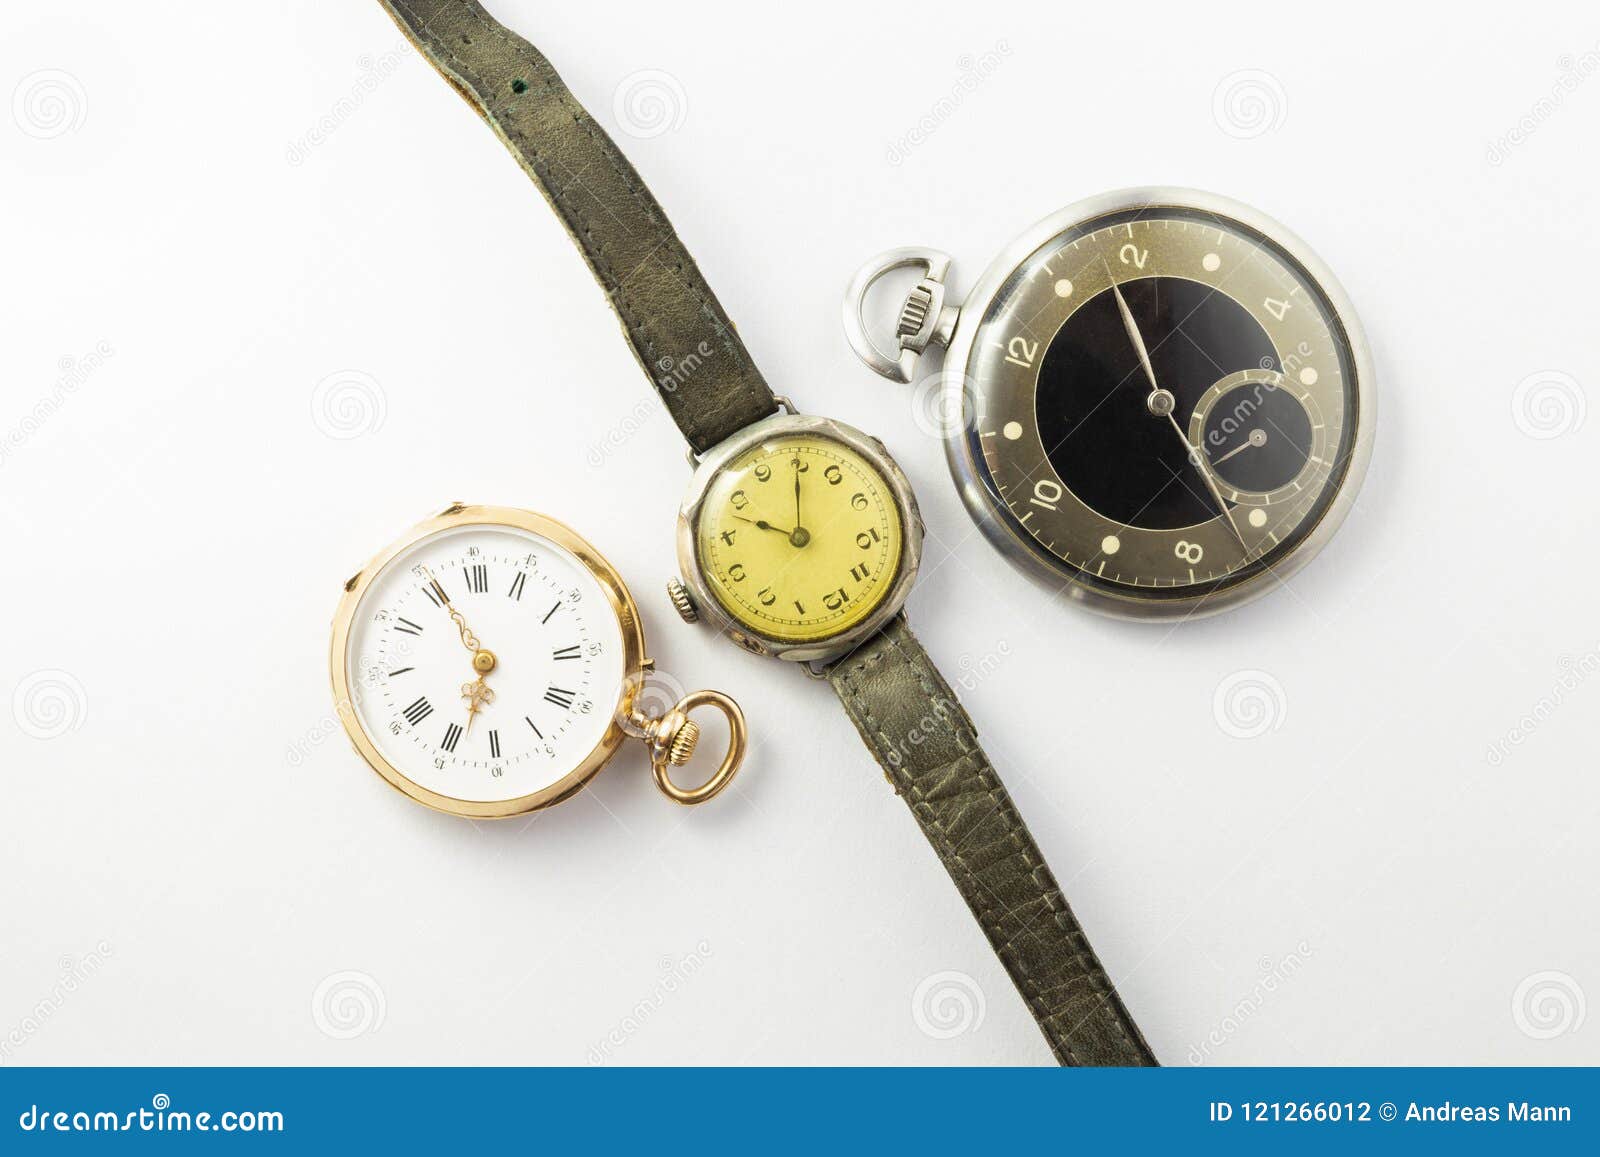 Set of Vintage Style Watches on White Background Stock Photo - Image of ...